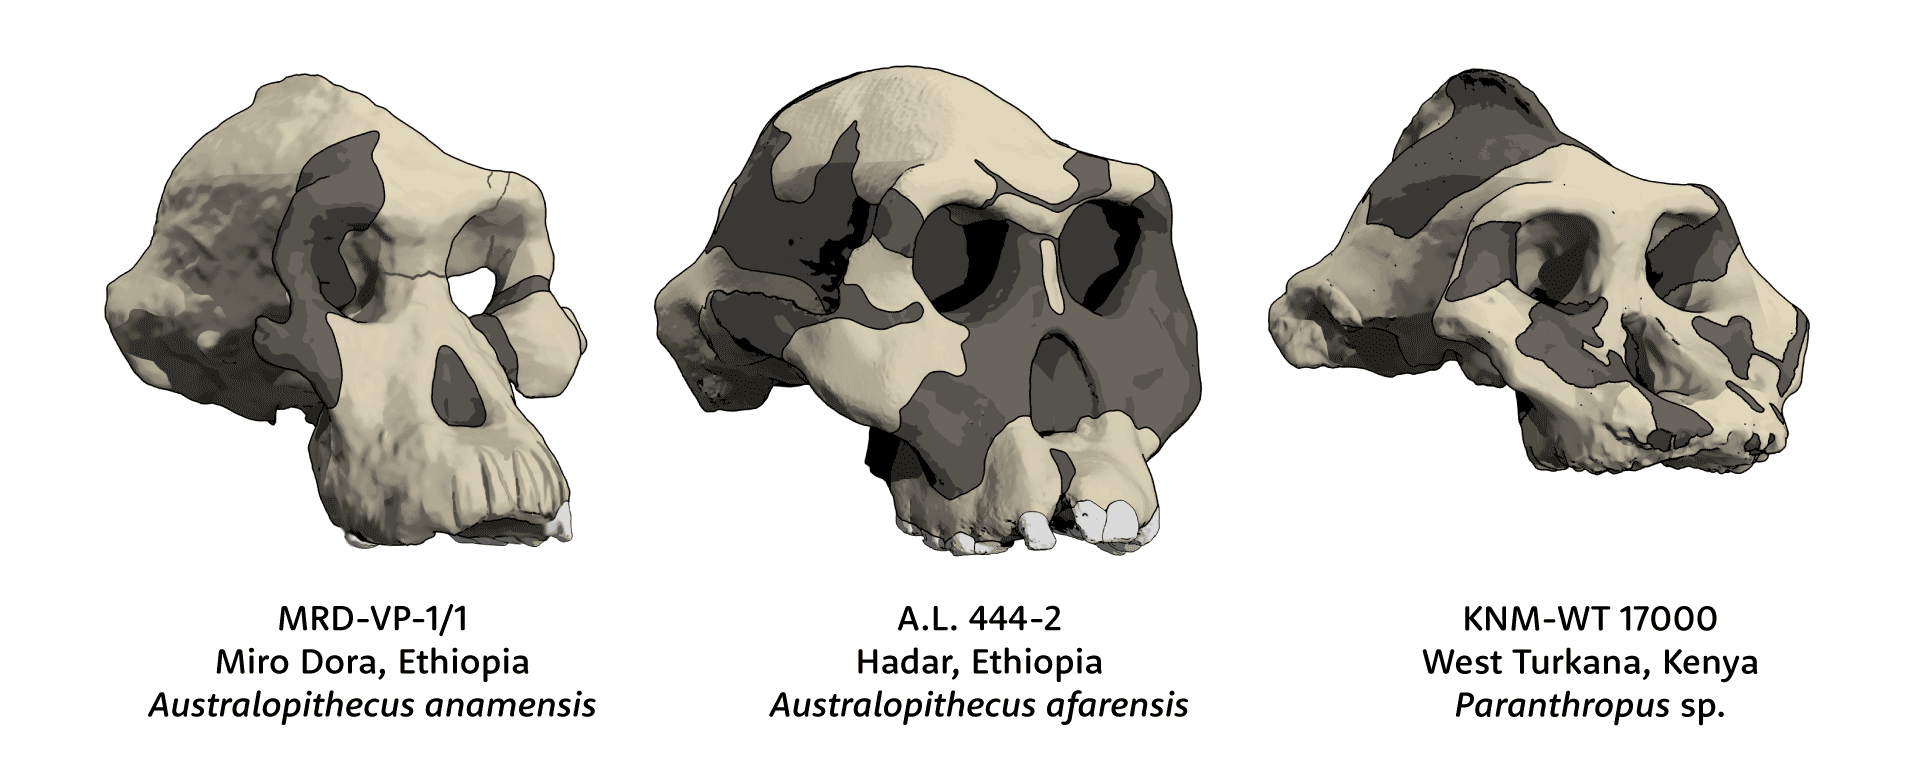 Skulls of MRD-VP-1/1 Australopithecus anamensis, A.L. 444-2 Australopithecus afarensis and KNM-WT 17000 Paranthropus